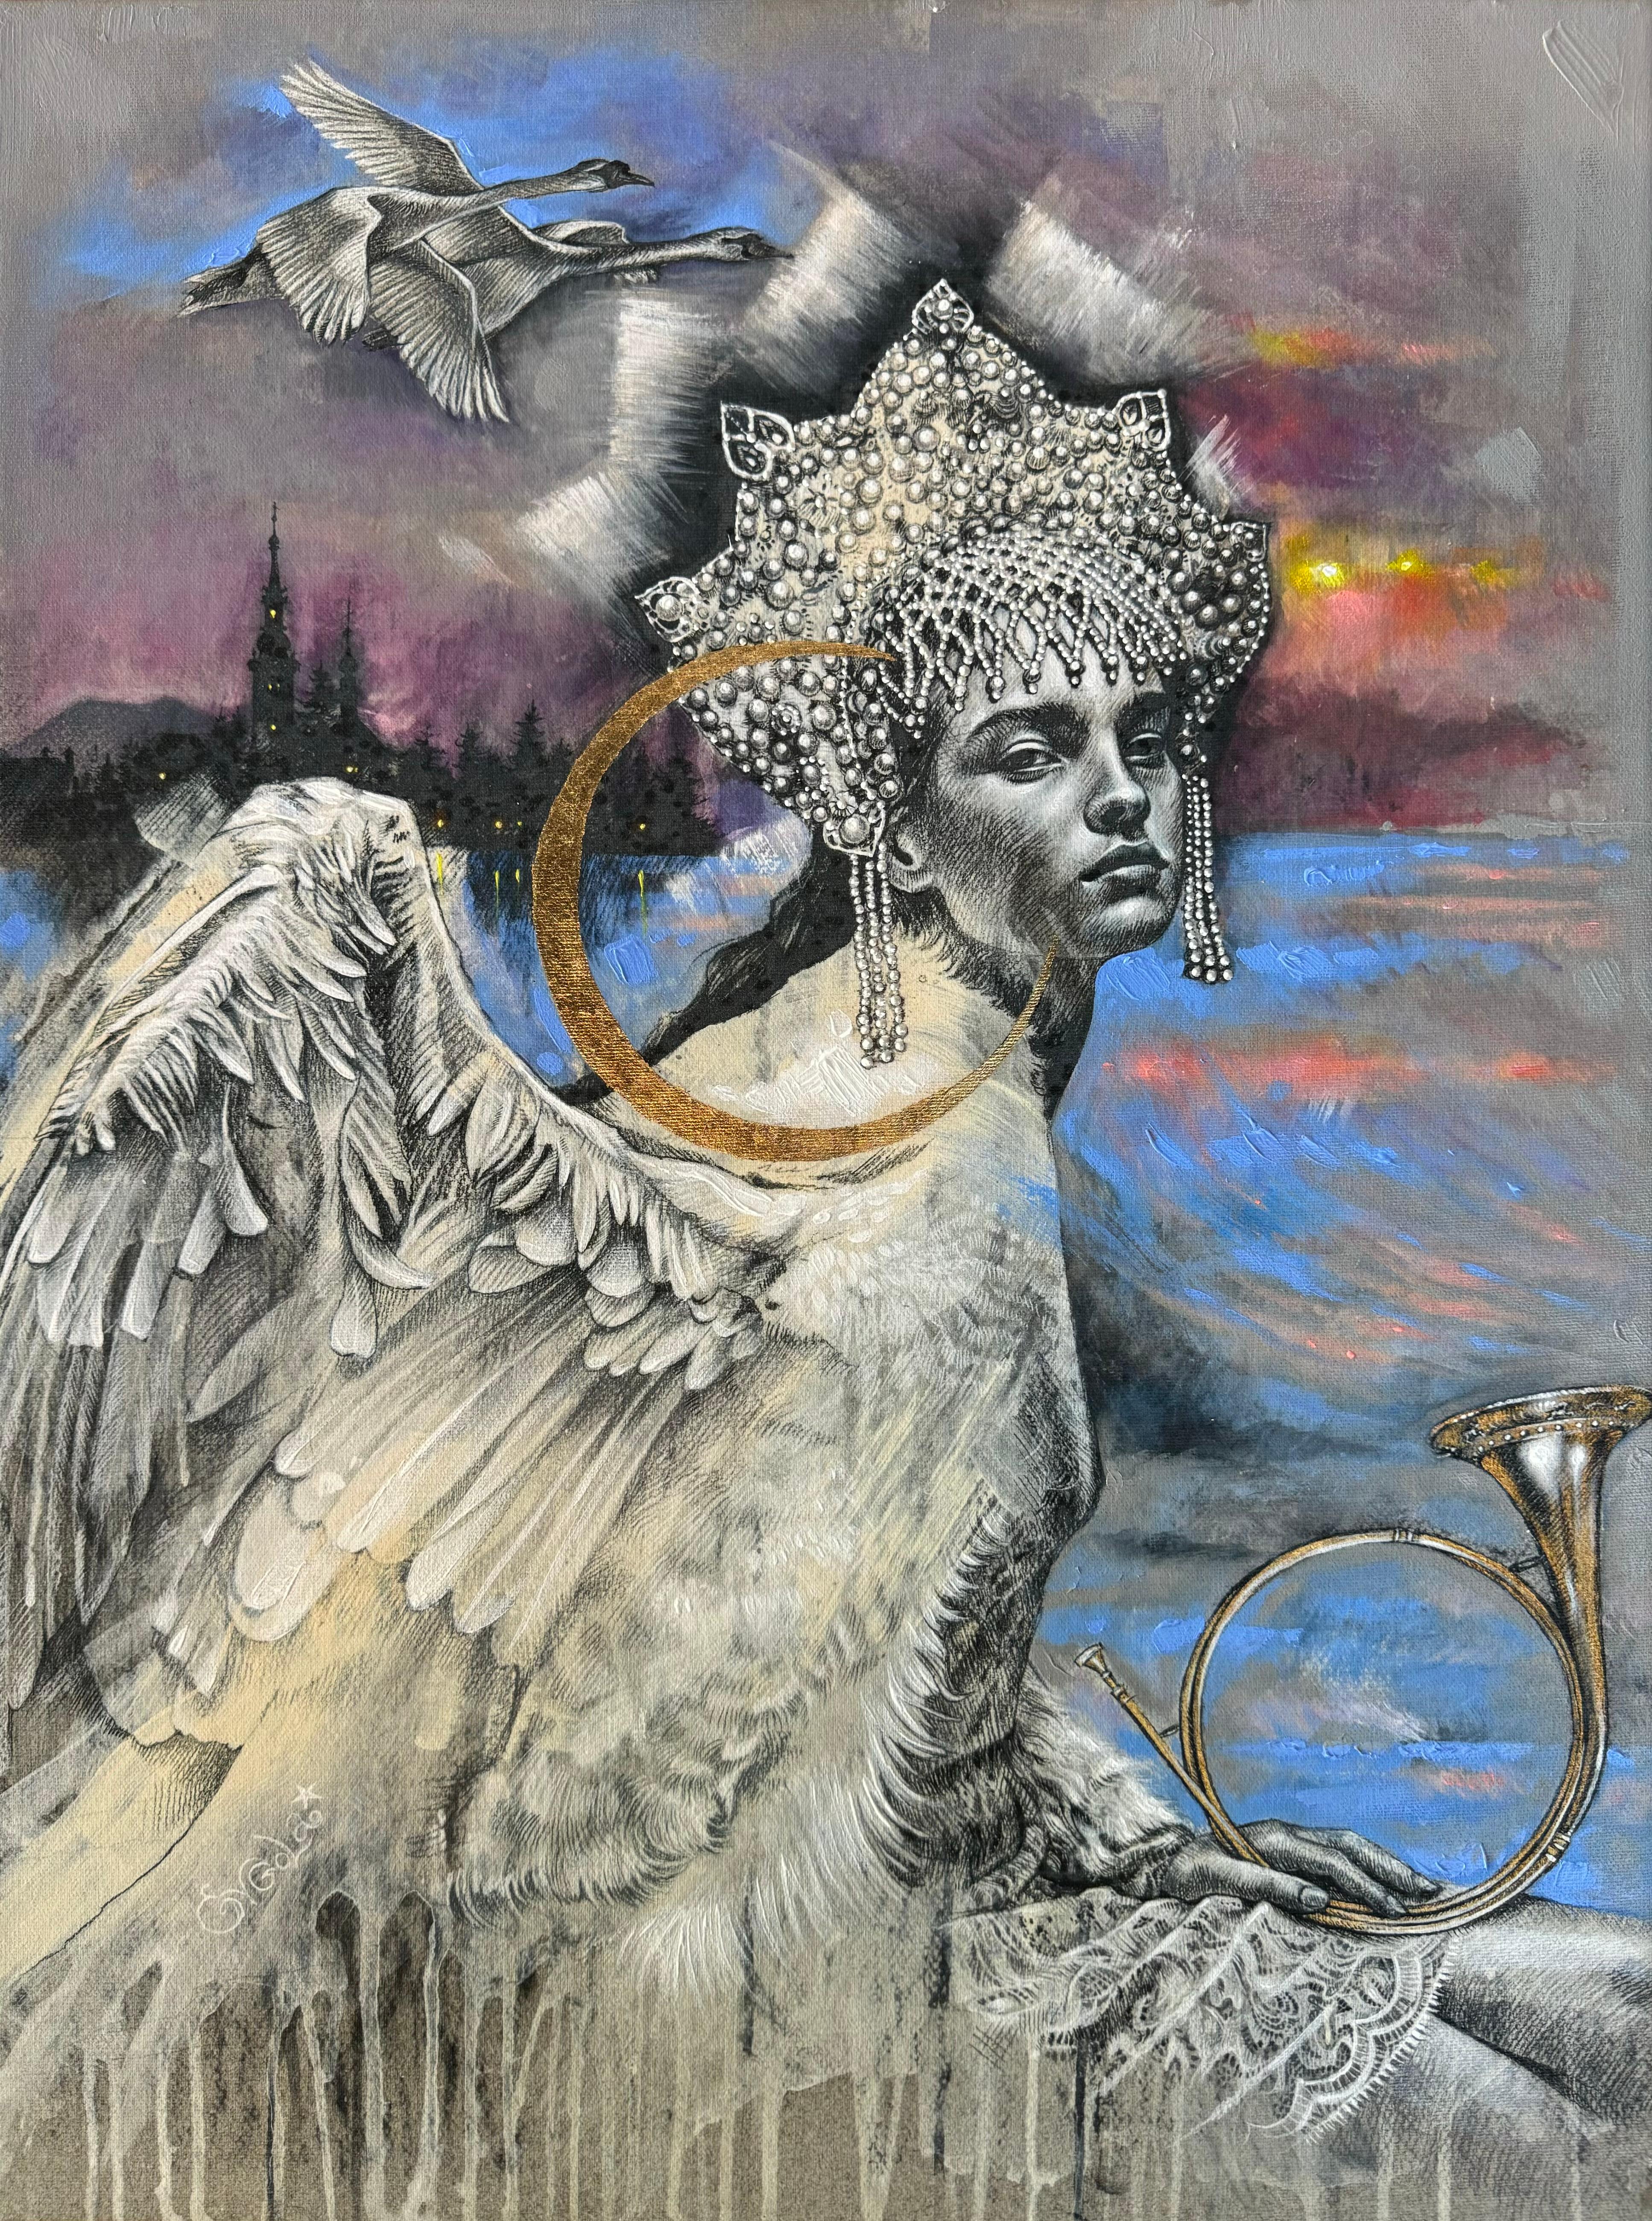 Figurative Print Evgeniya Golik  - Œuvre d'art figurative du réalisme magique, Swan Song par Evgeniya Golik